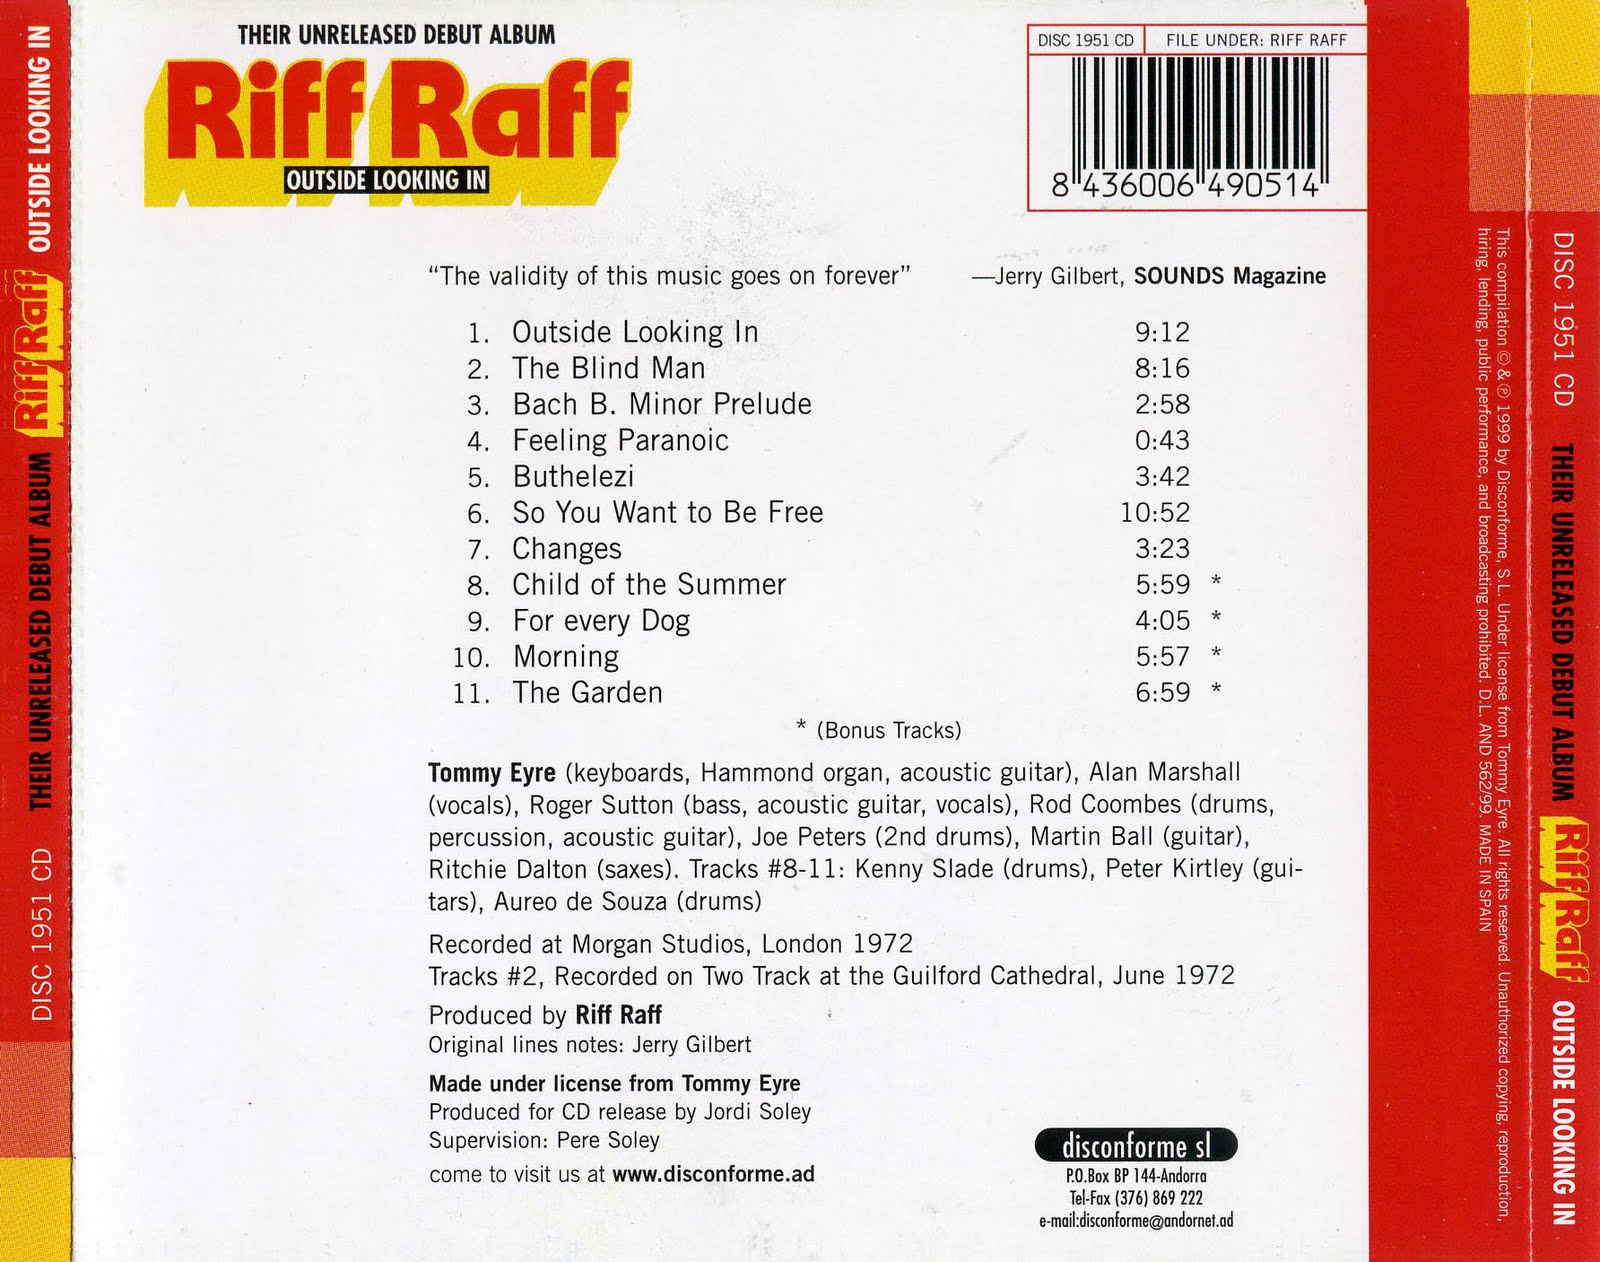 Riff raffs new album cover looks like a dick